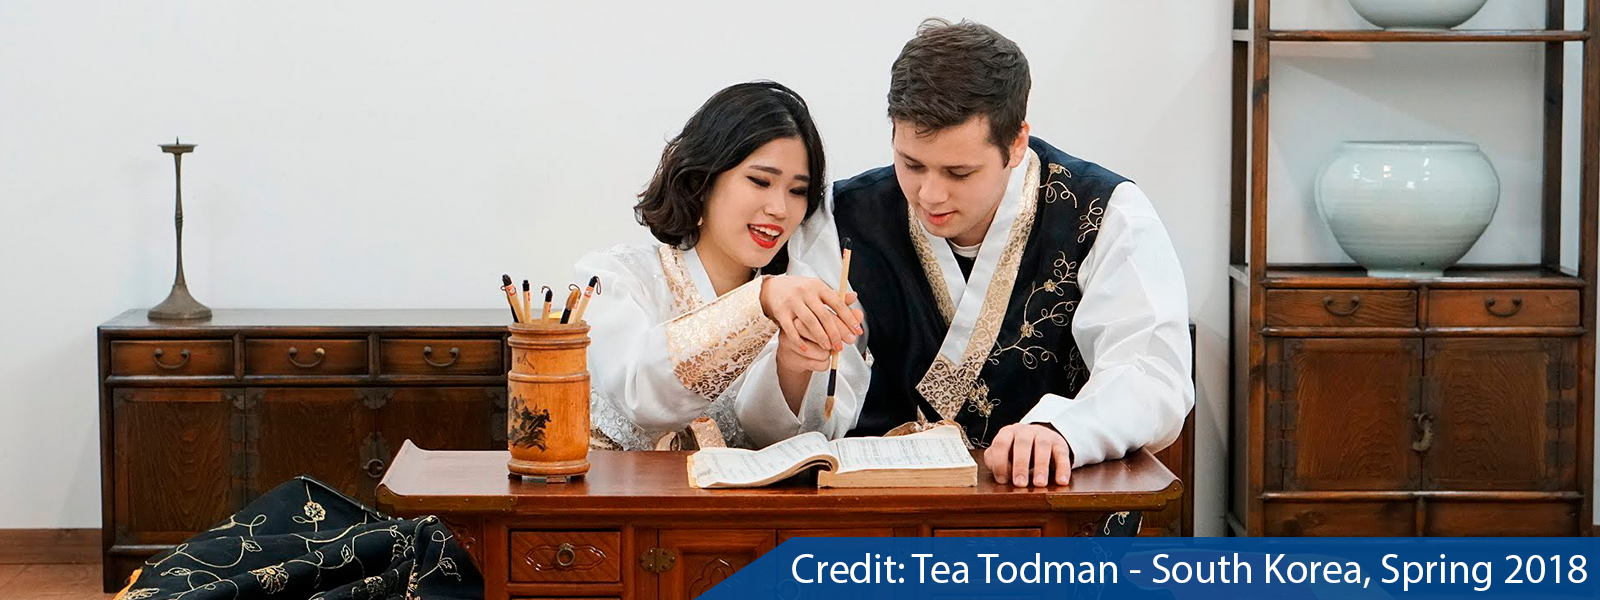 Tea Todman - South Korea, Spring 2018 4